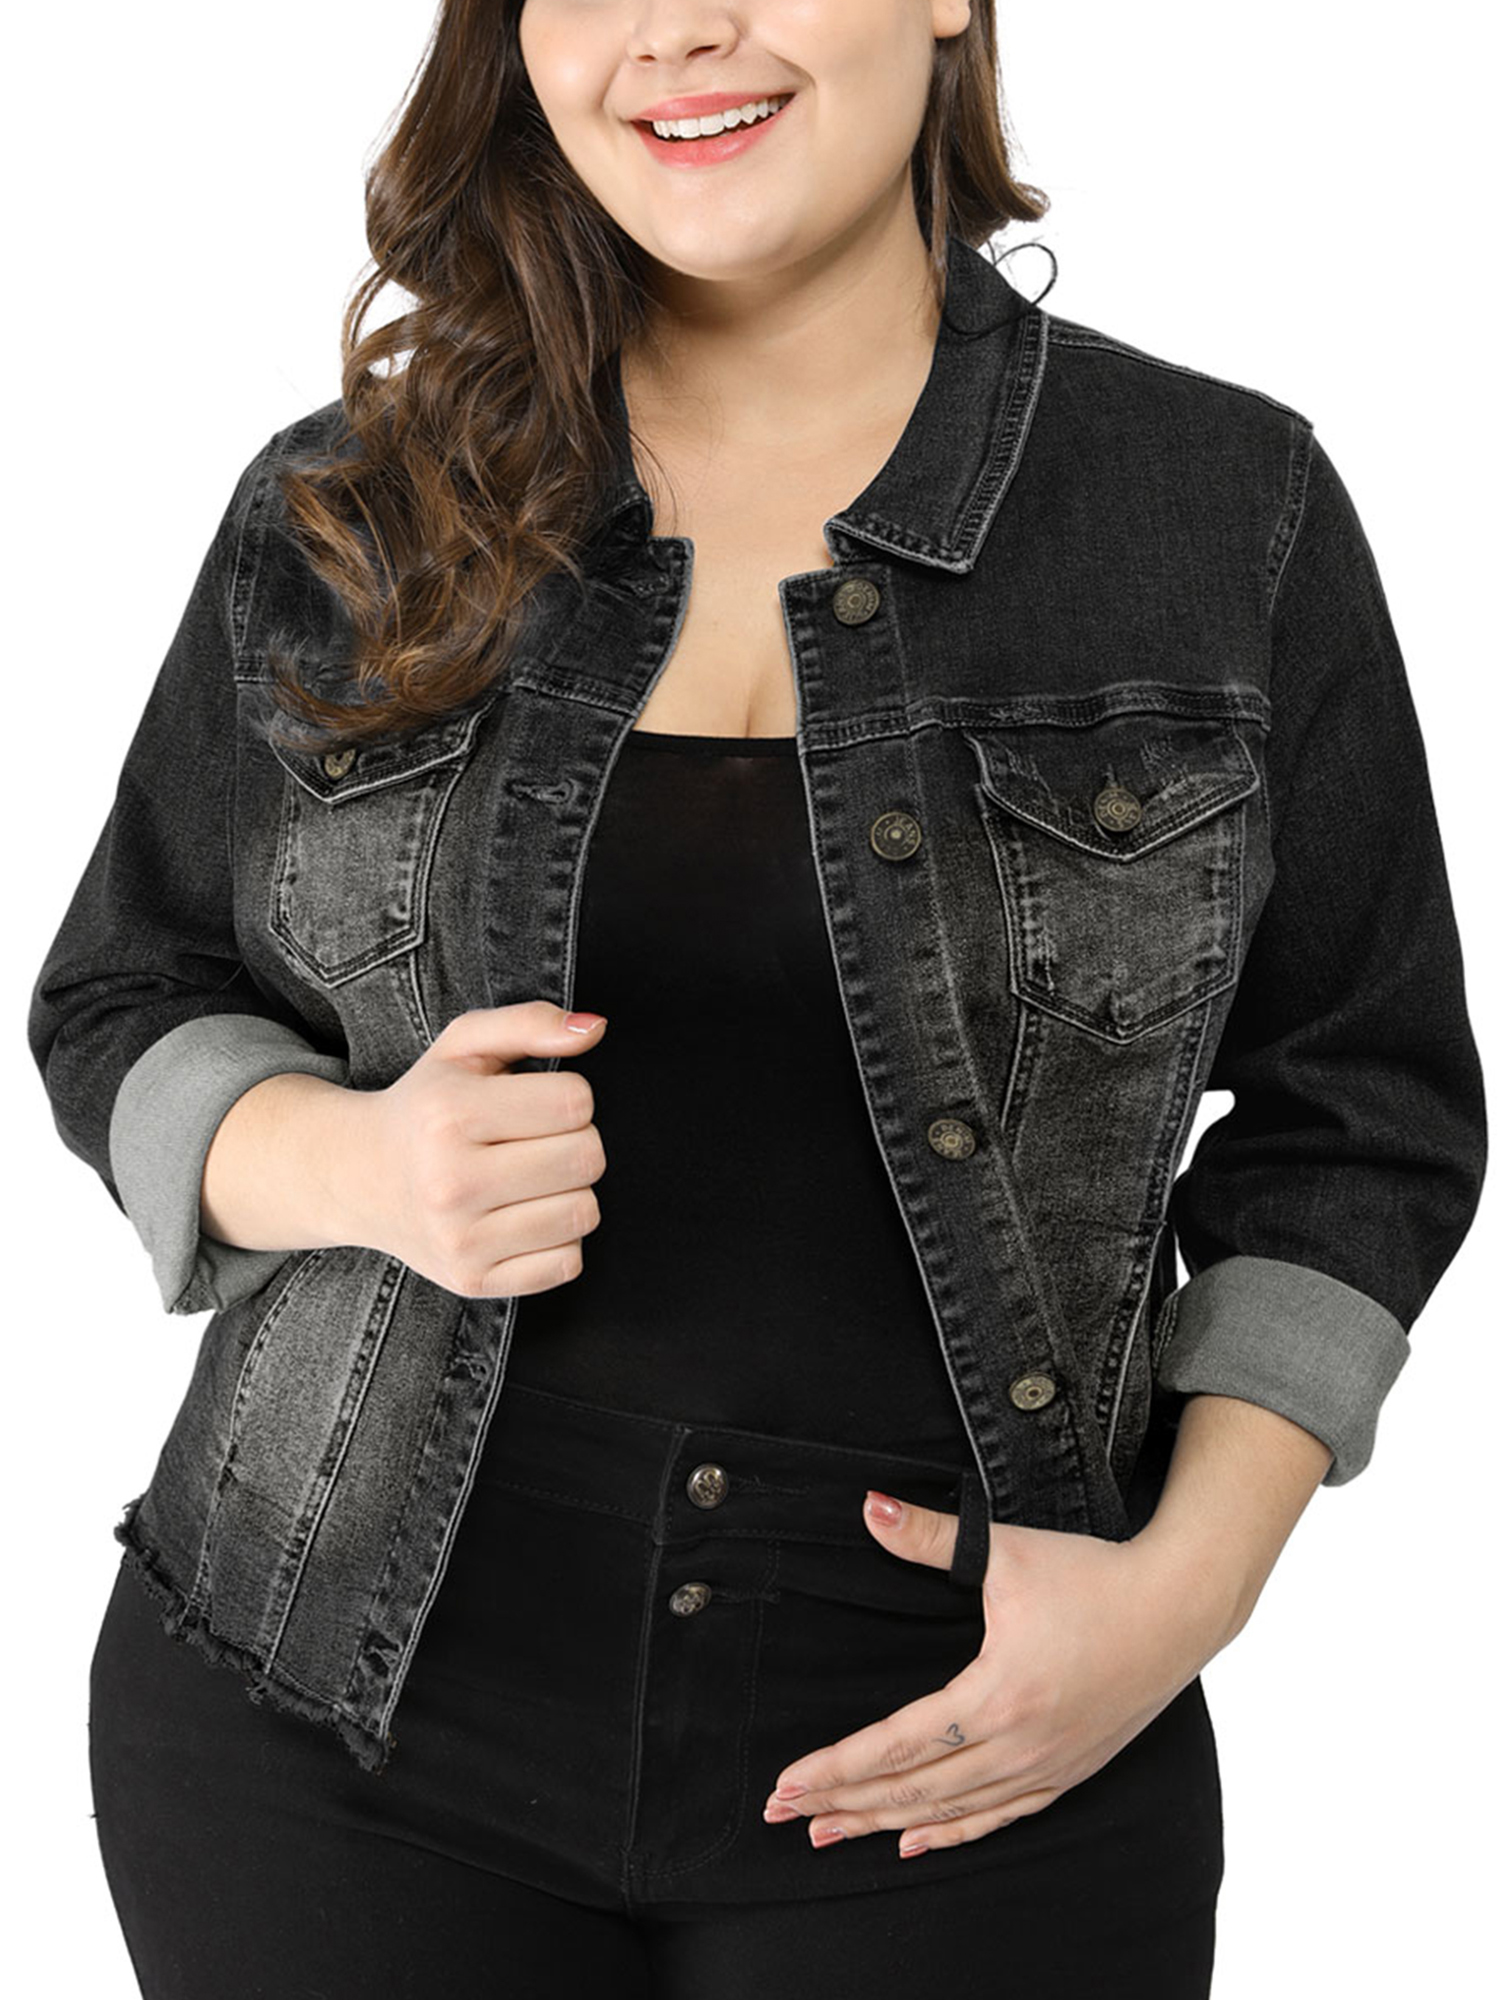 Unique Bargains Women's Plus Size Washed Front Frayed Classic Denim Jacket - image 1 of 8